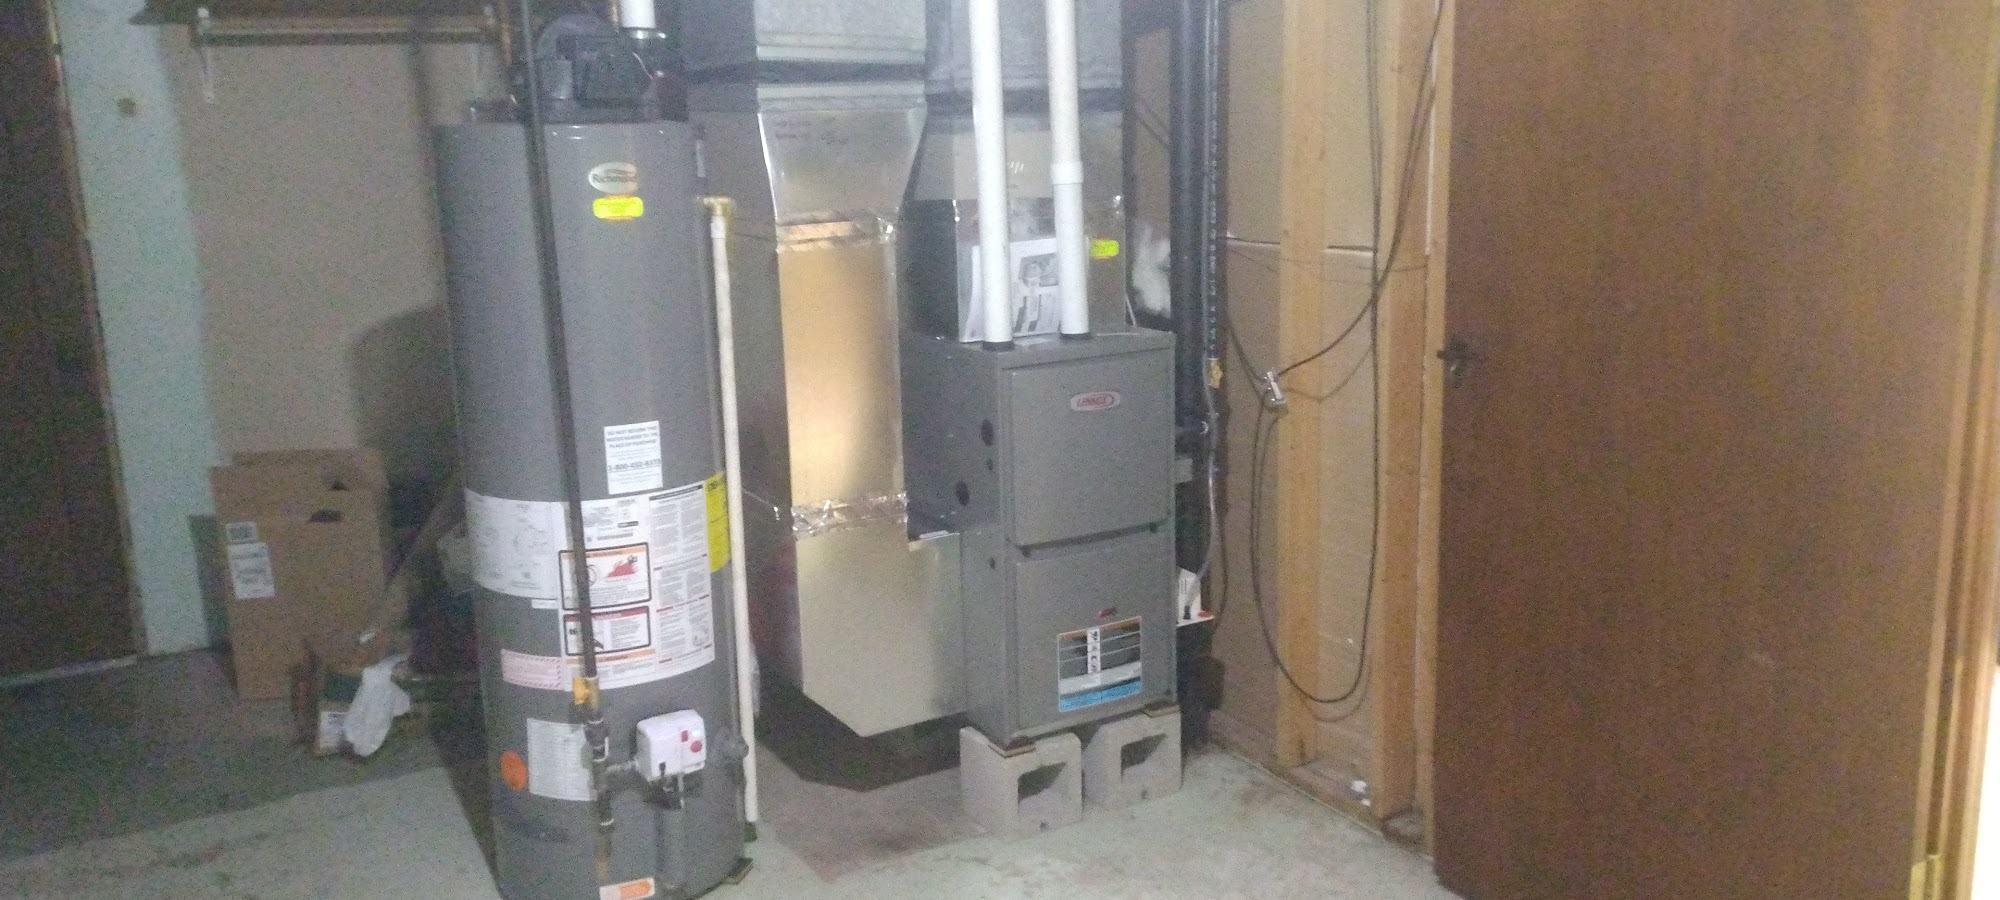 Tjarks Plumbing, Heating & Air Conditioning, Inc. 121 River St, Iowa Falls Iowa 50126